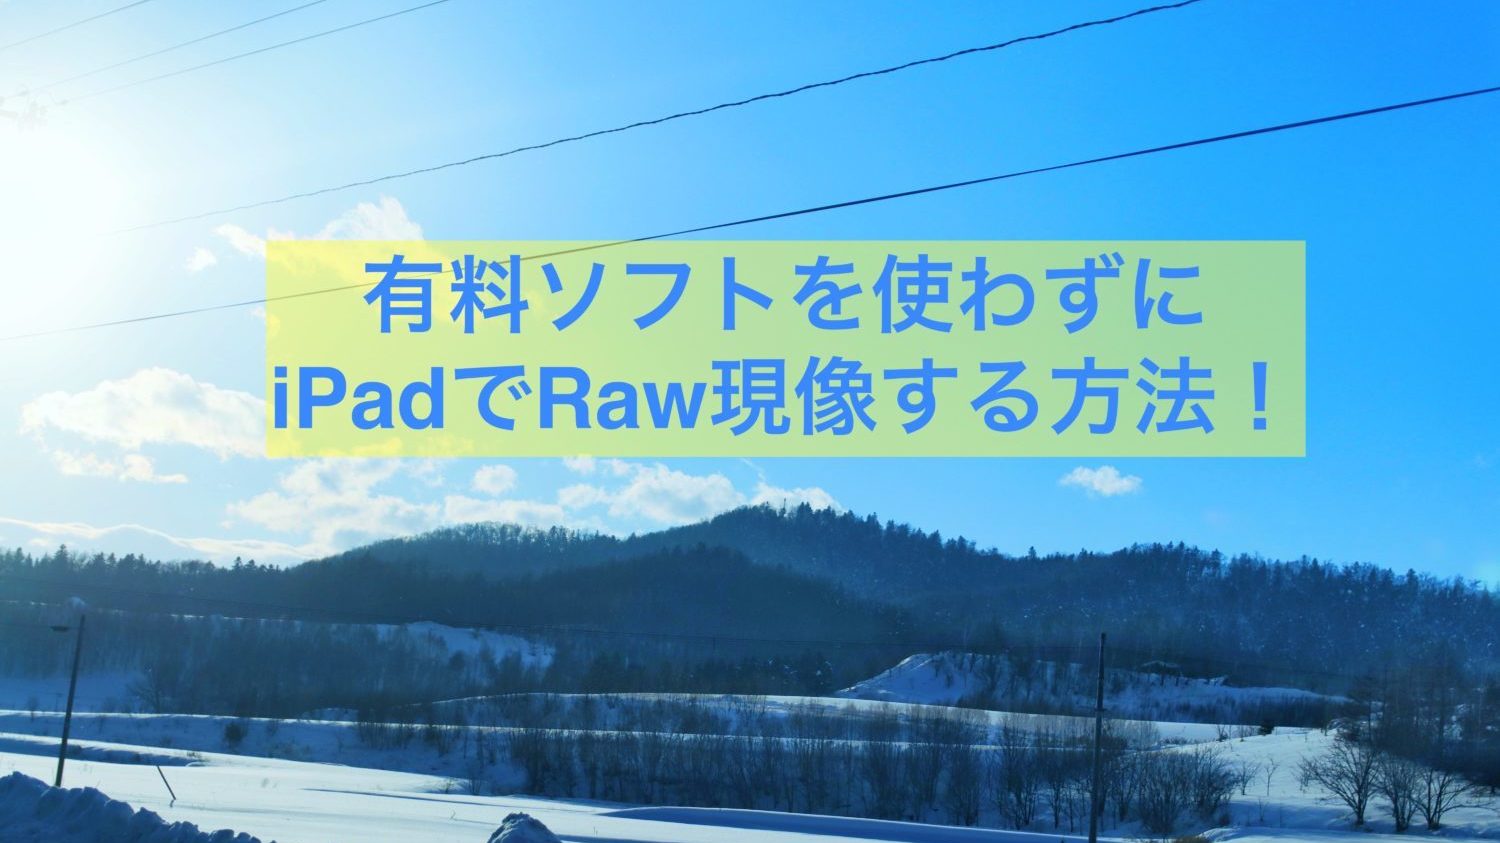 Ipadで無料アプリだけを利用してraw現像する方法紹介 しおビル